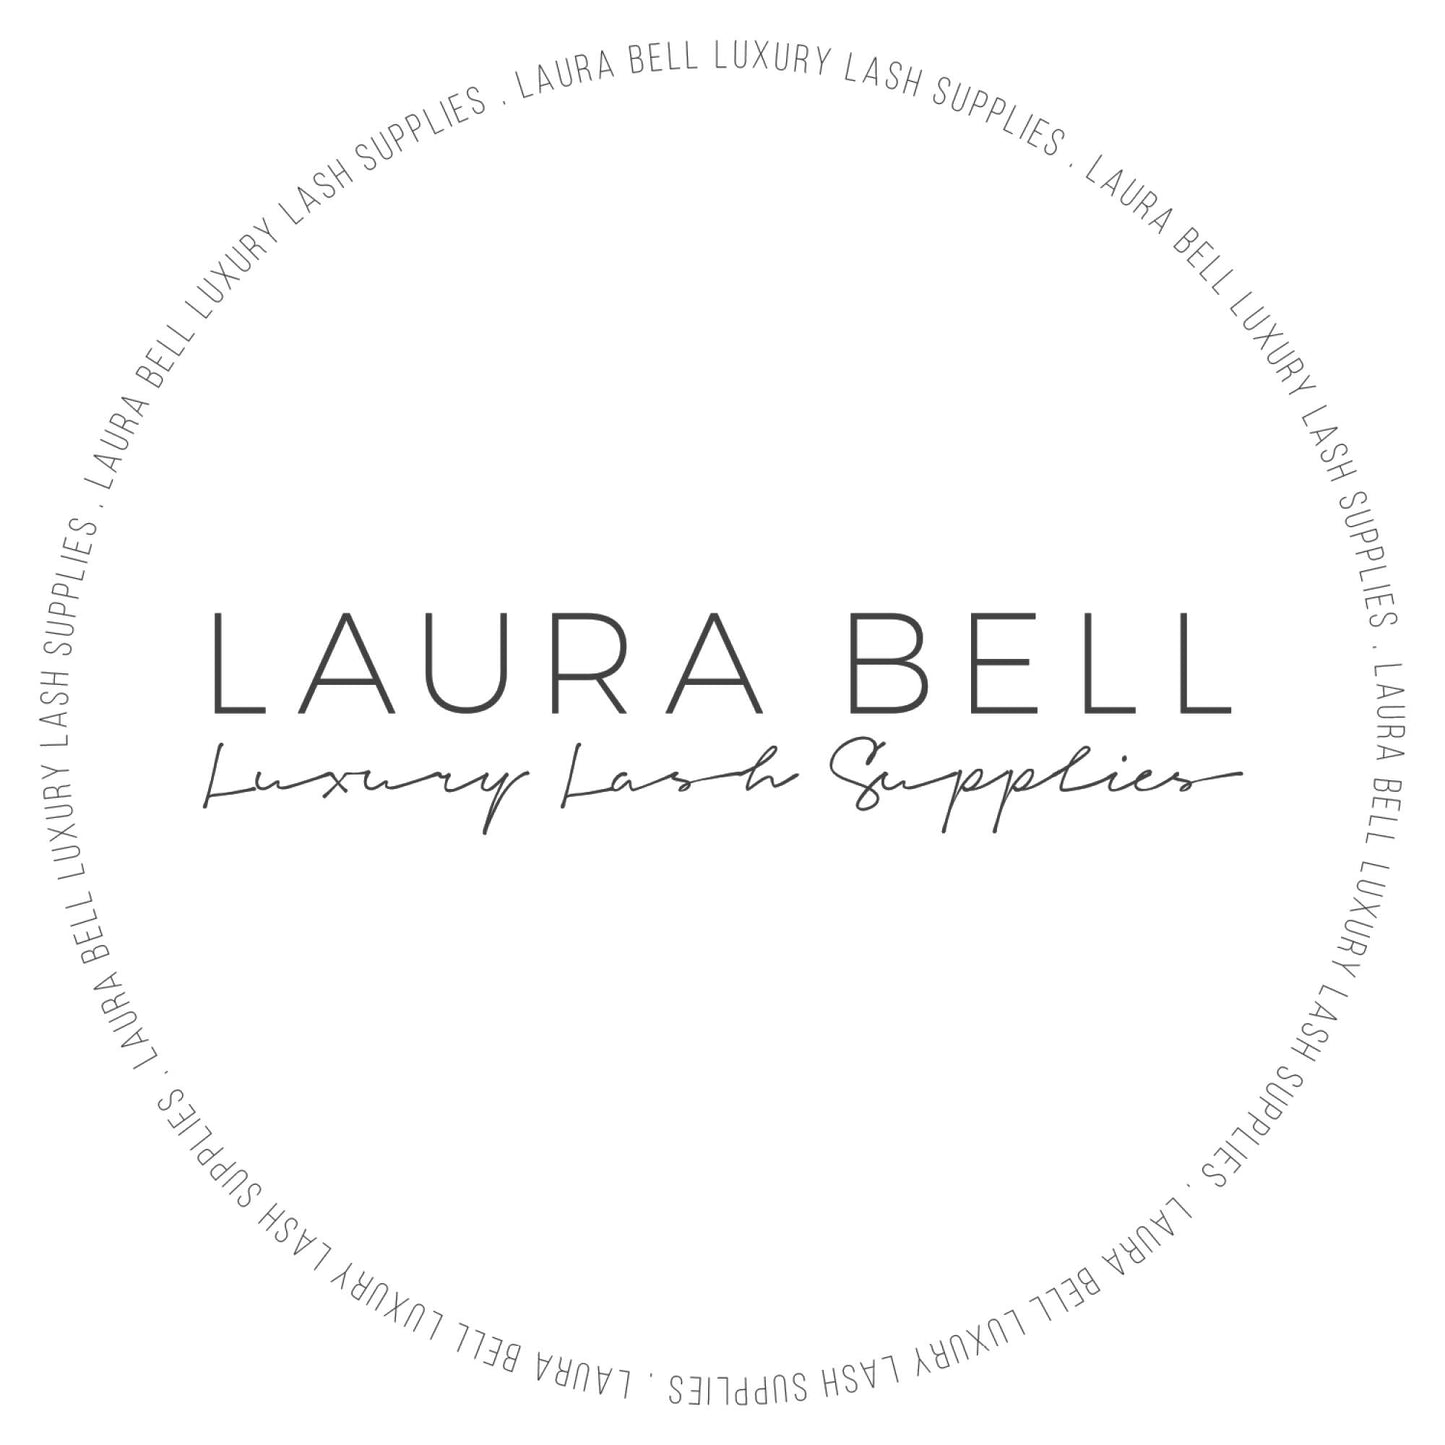 Classic Lash Student Kit Standard - Laura Bell Luxury Lash Supplies